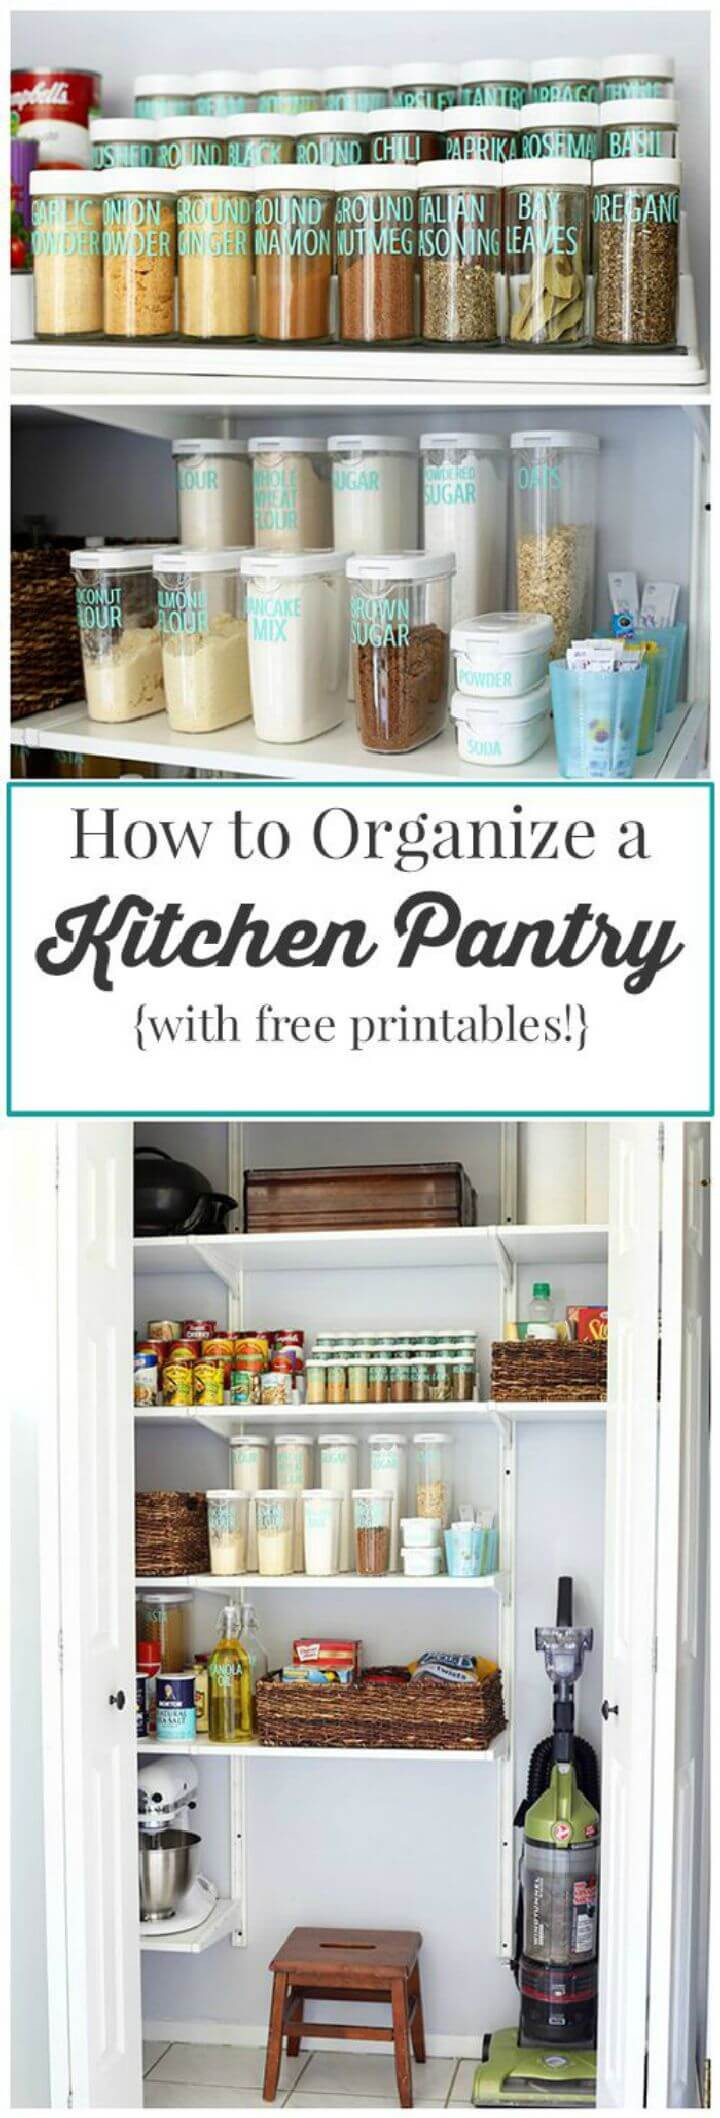 Pantry Organization DIY
 60 Best Pantry Organization Ideas DIY Page 3 of 12